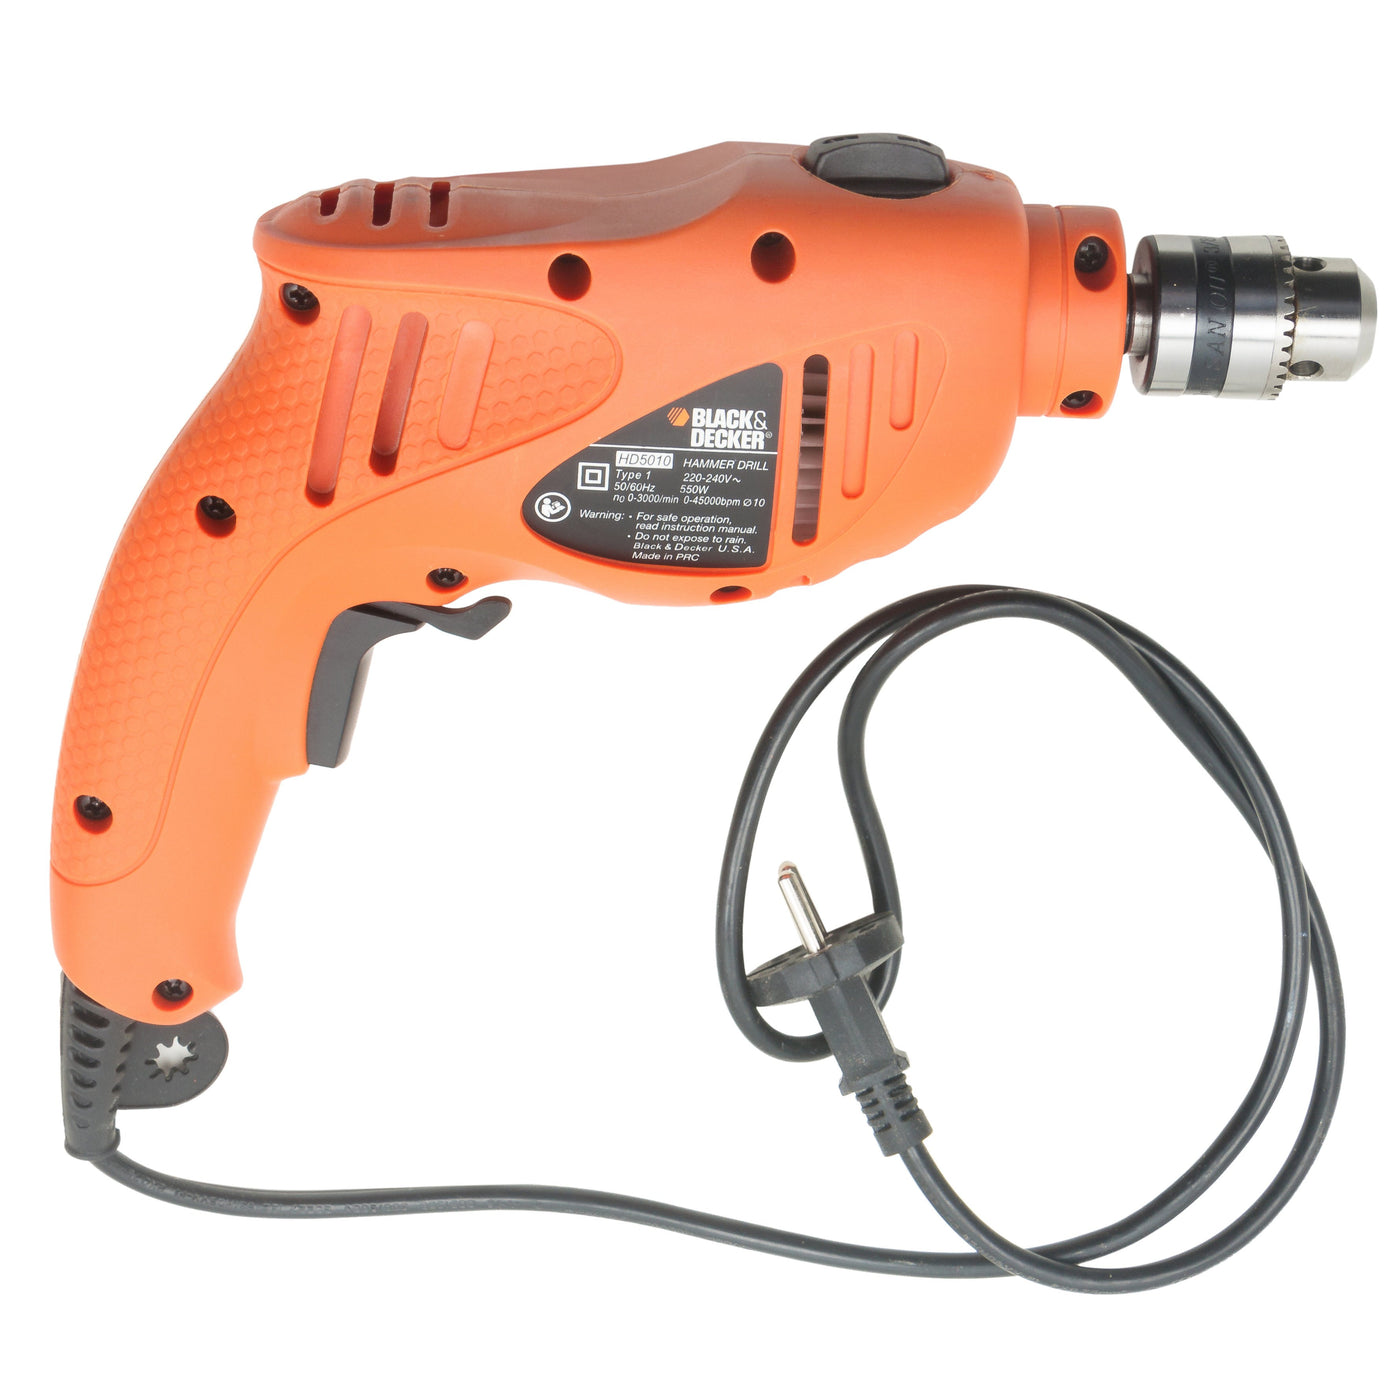 Brown Box 500W 2,800 Rpm Corded Variable Speed Hammer Drill, Depth Gauge & 5 Drill Bits , Orange/Black